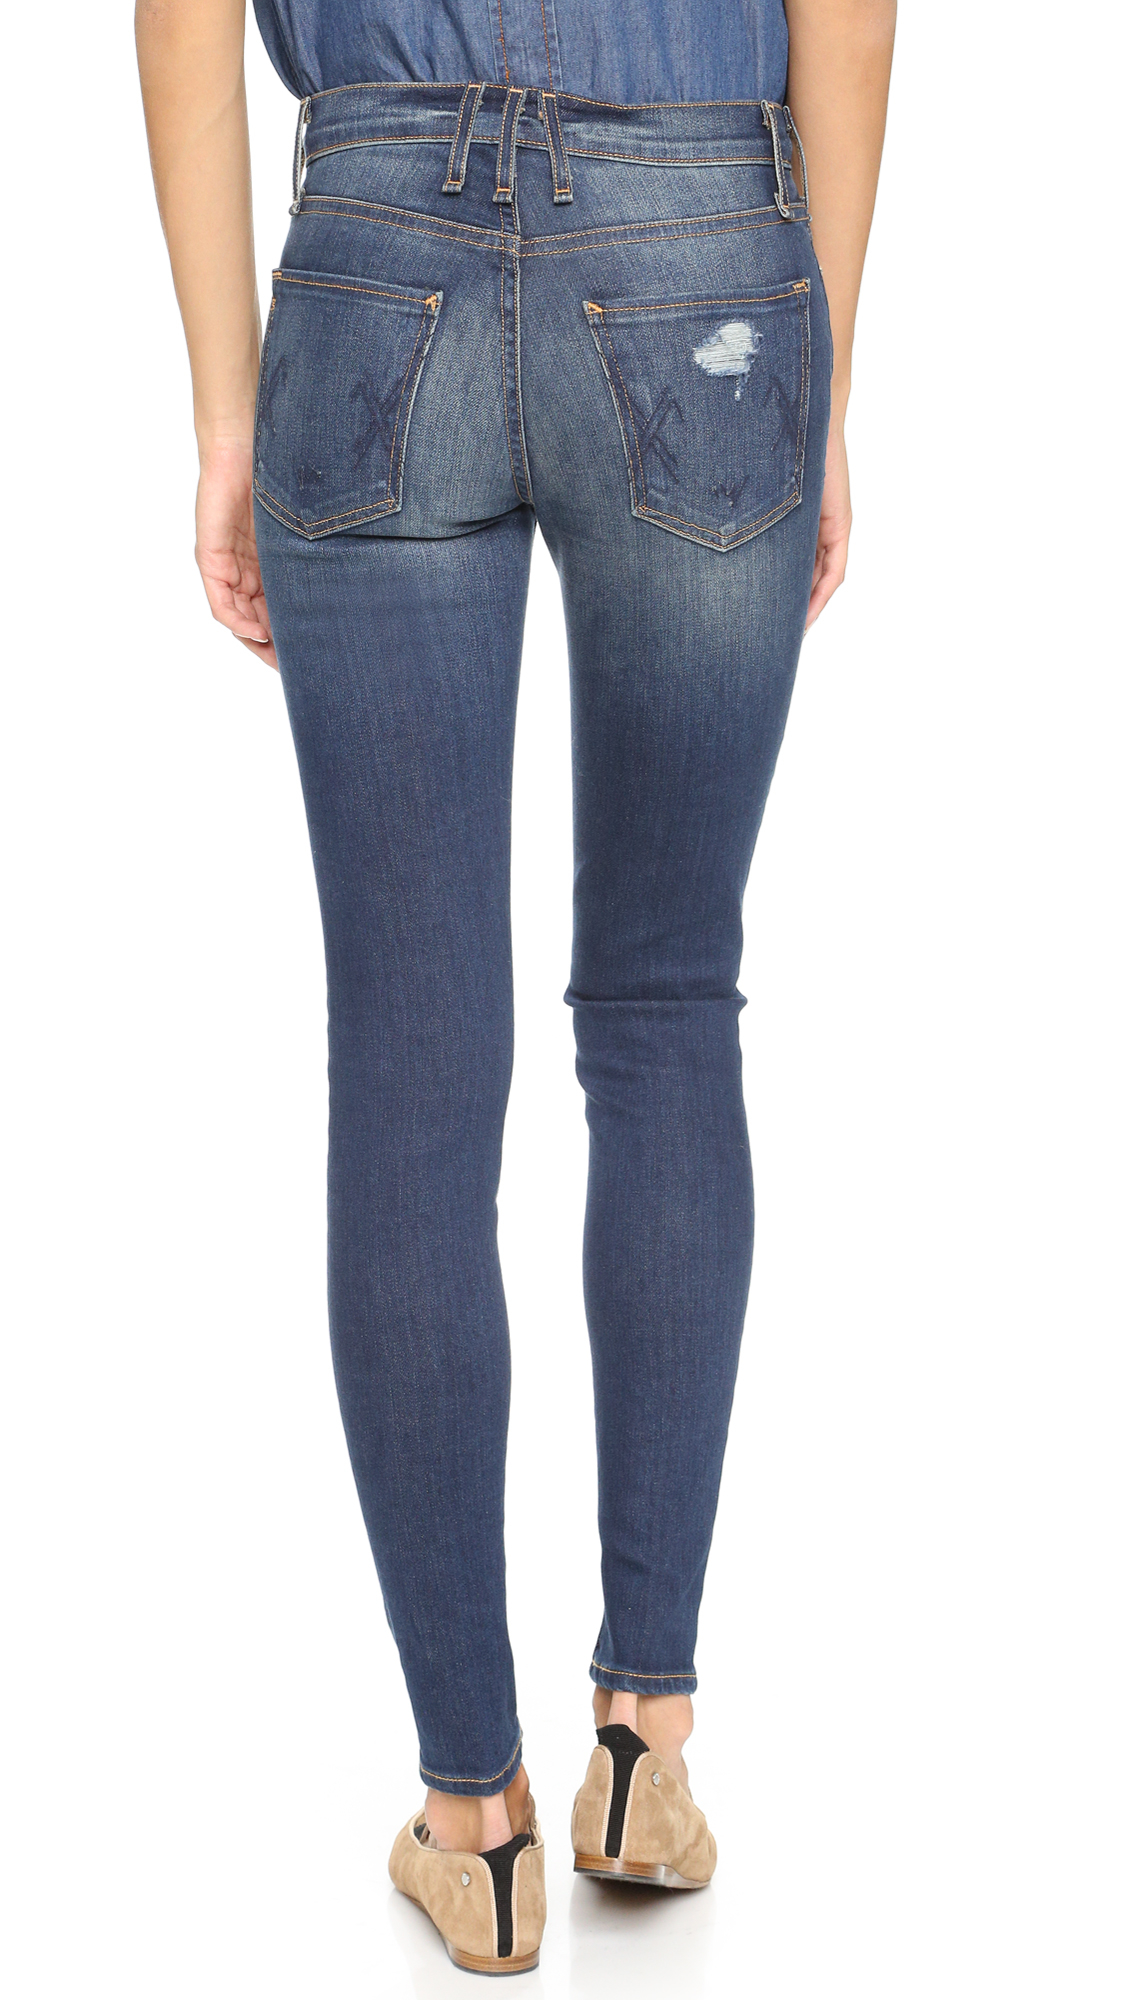 Lyst - Mcguire Denim Newton Skinny Jeans in Blue